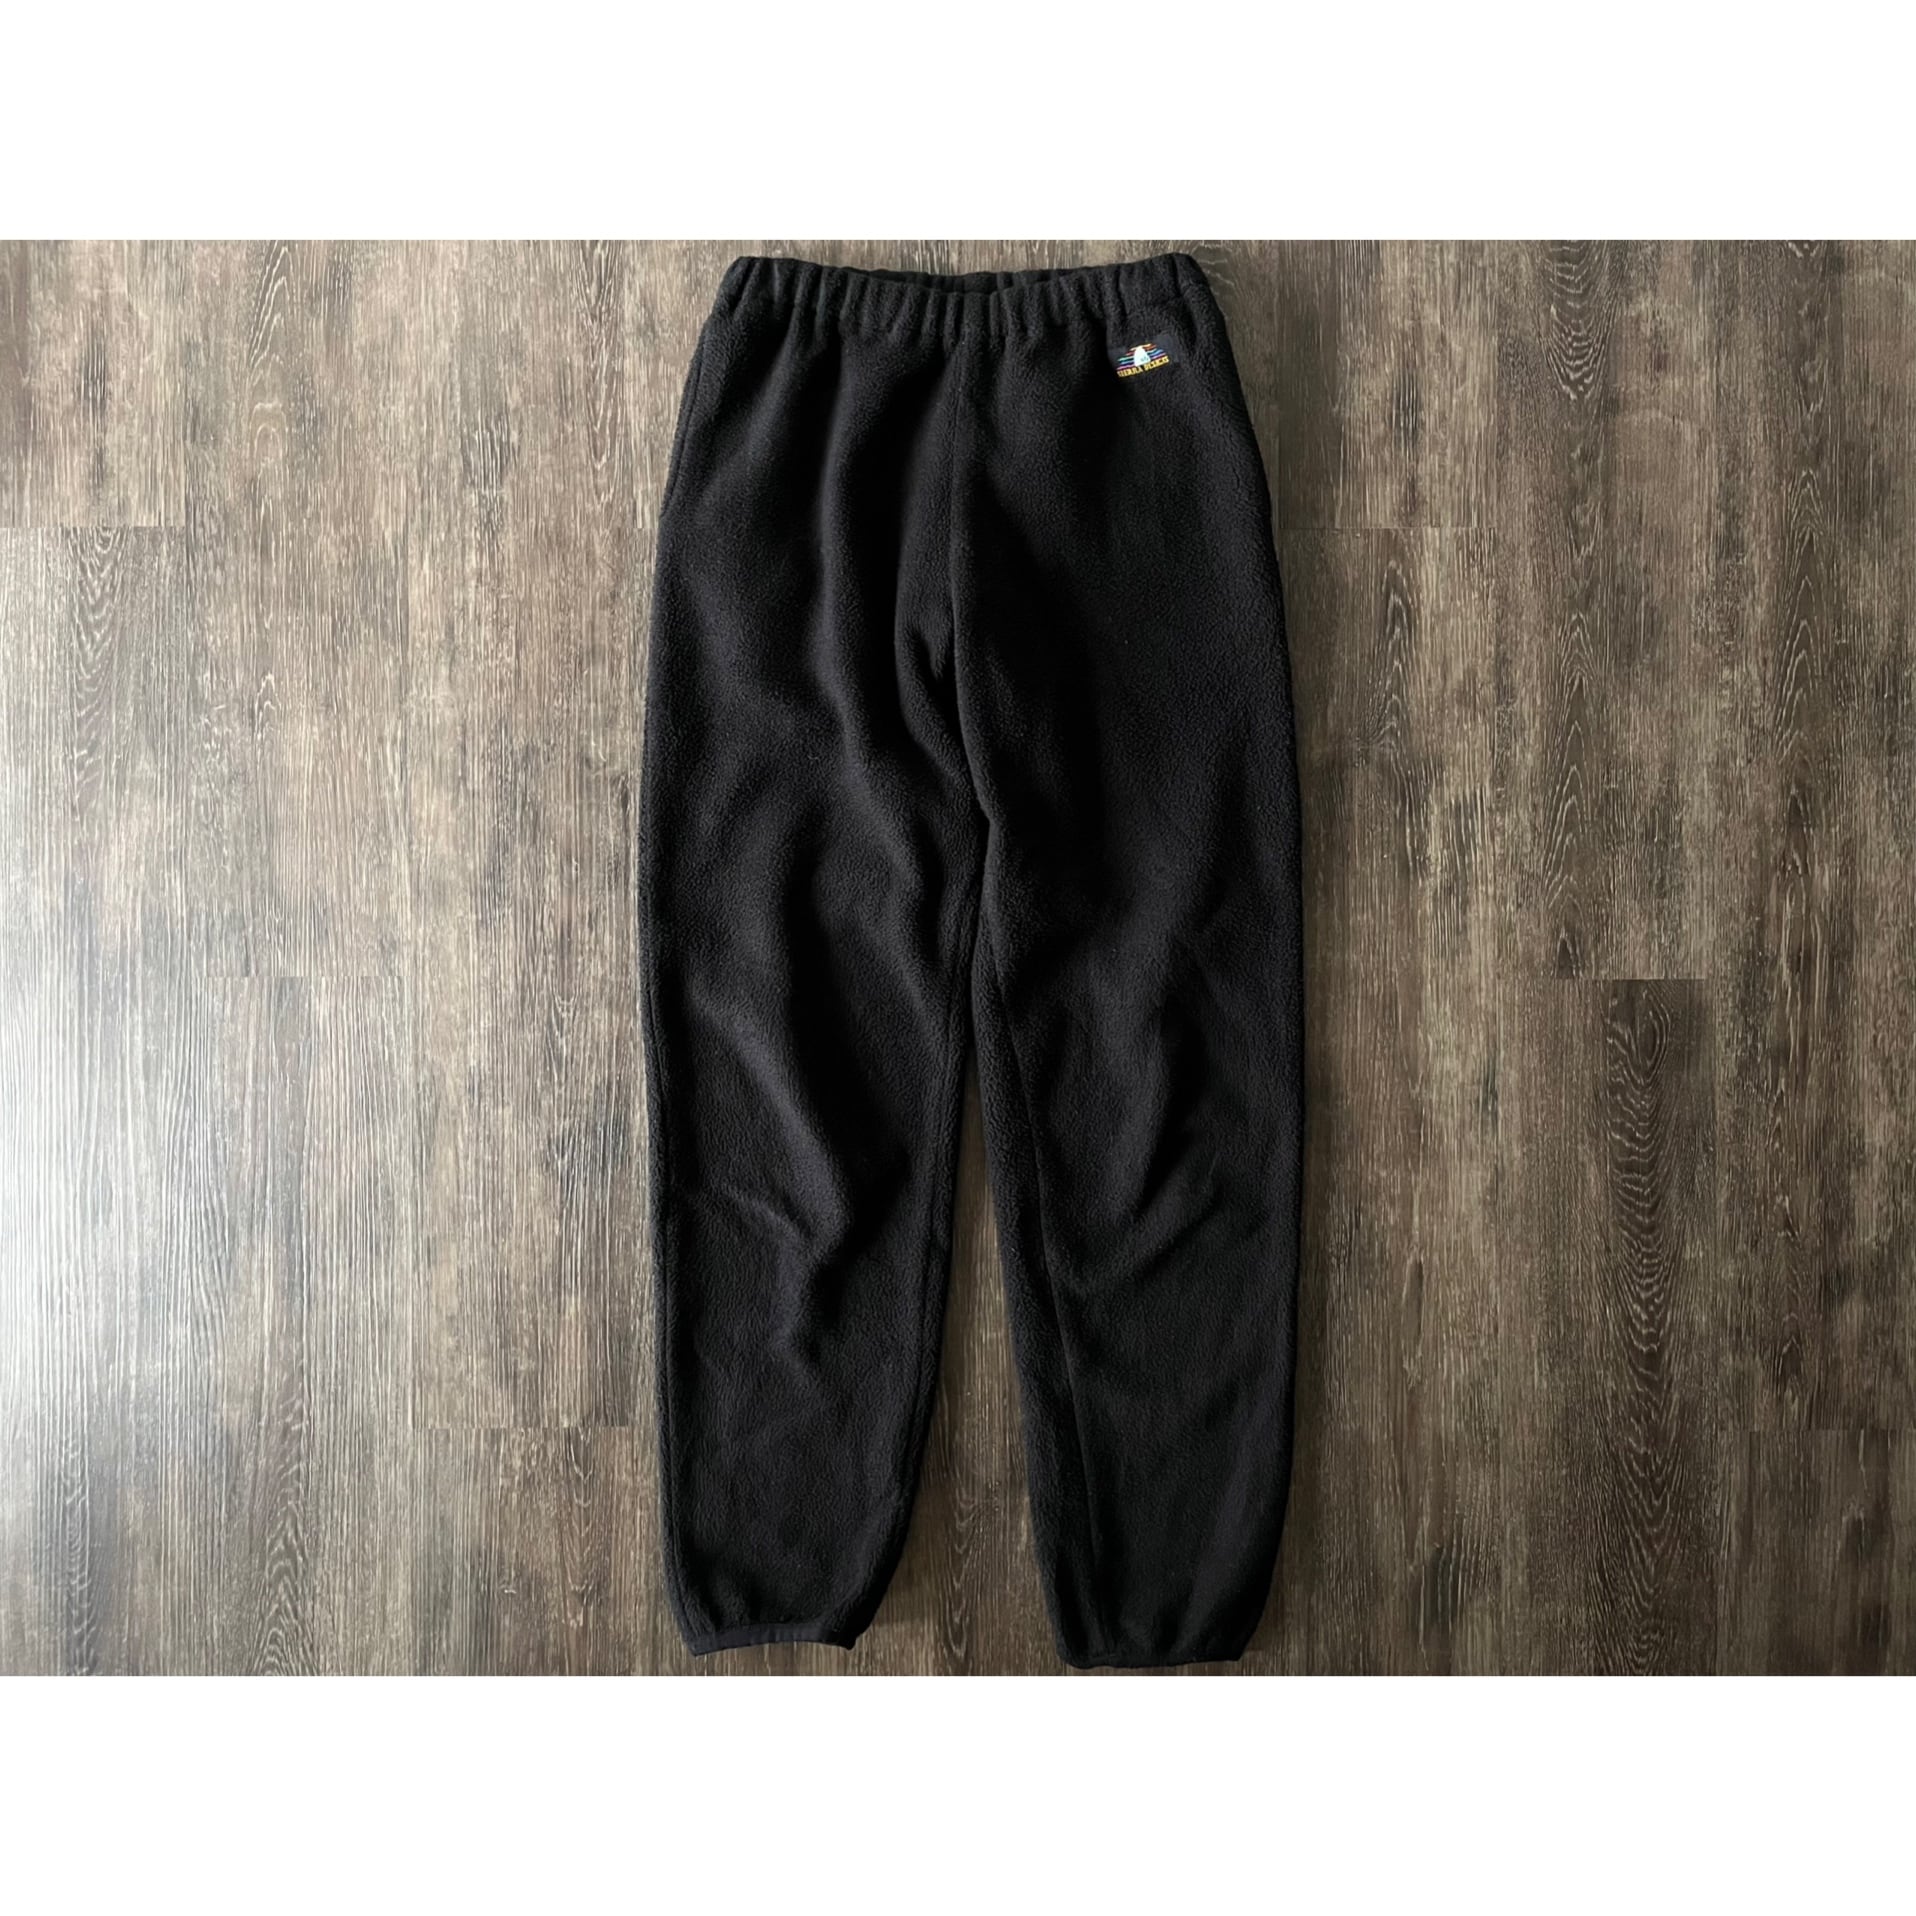 sierra designs fleece pants black made in USA シエラデザイン